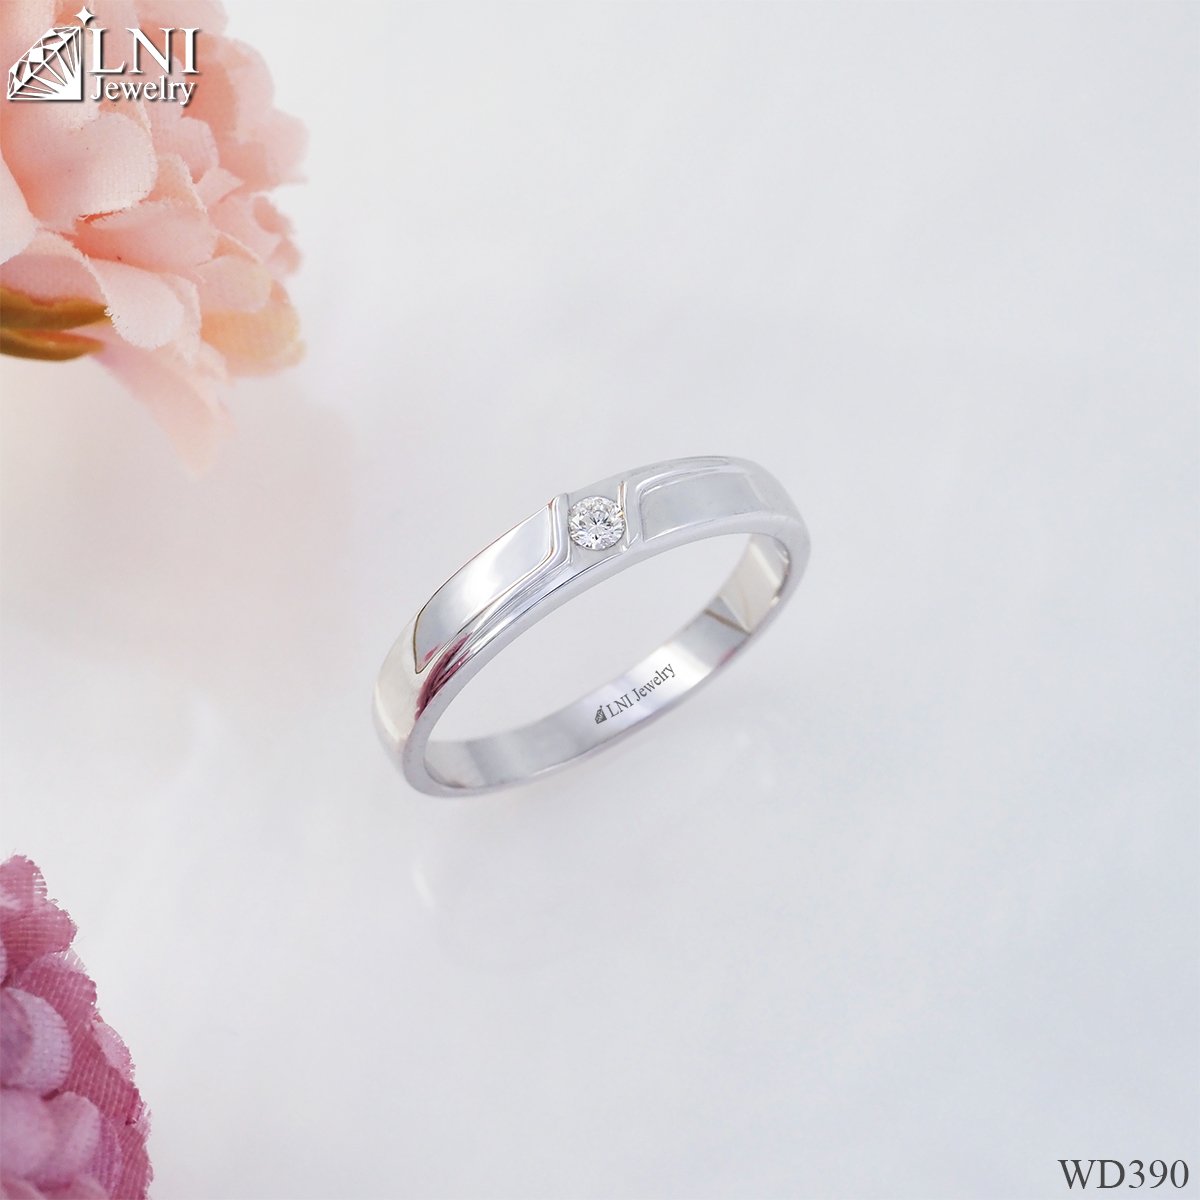 WD390 Single Diamond Ring